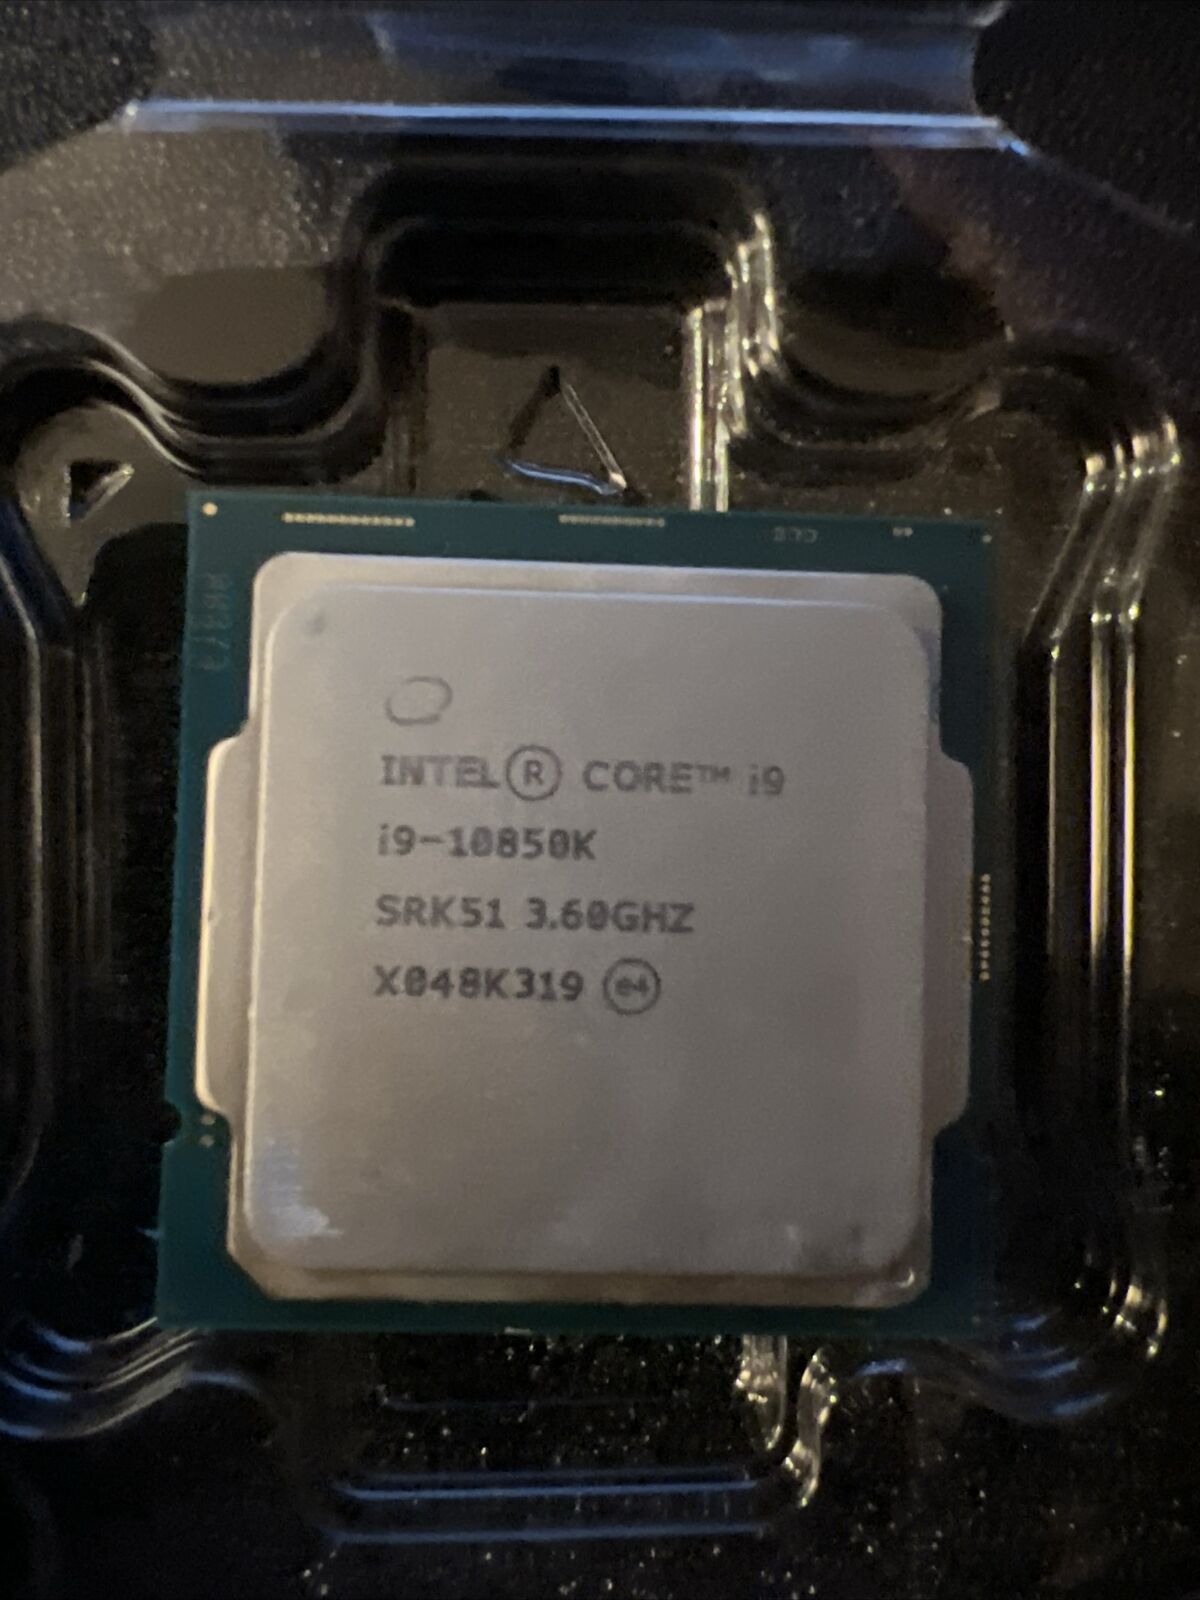 Intel Core i9-10850K (SRK51) 10-Cores 3.6GHz Socket FCLGA1200 CPU Processor